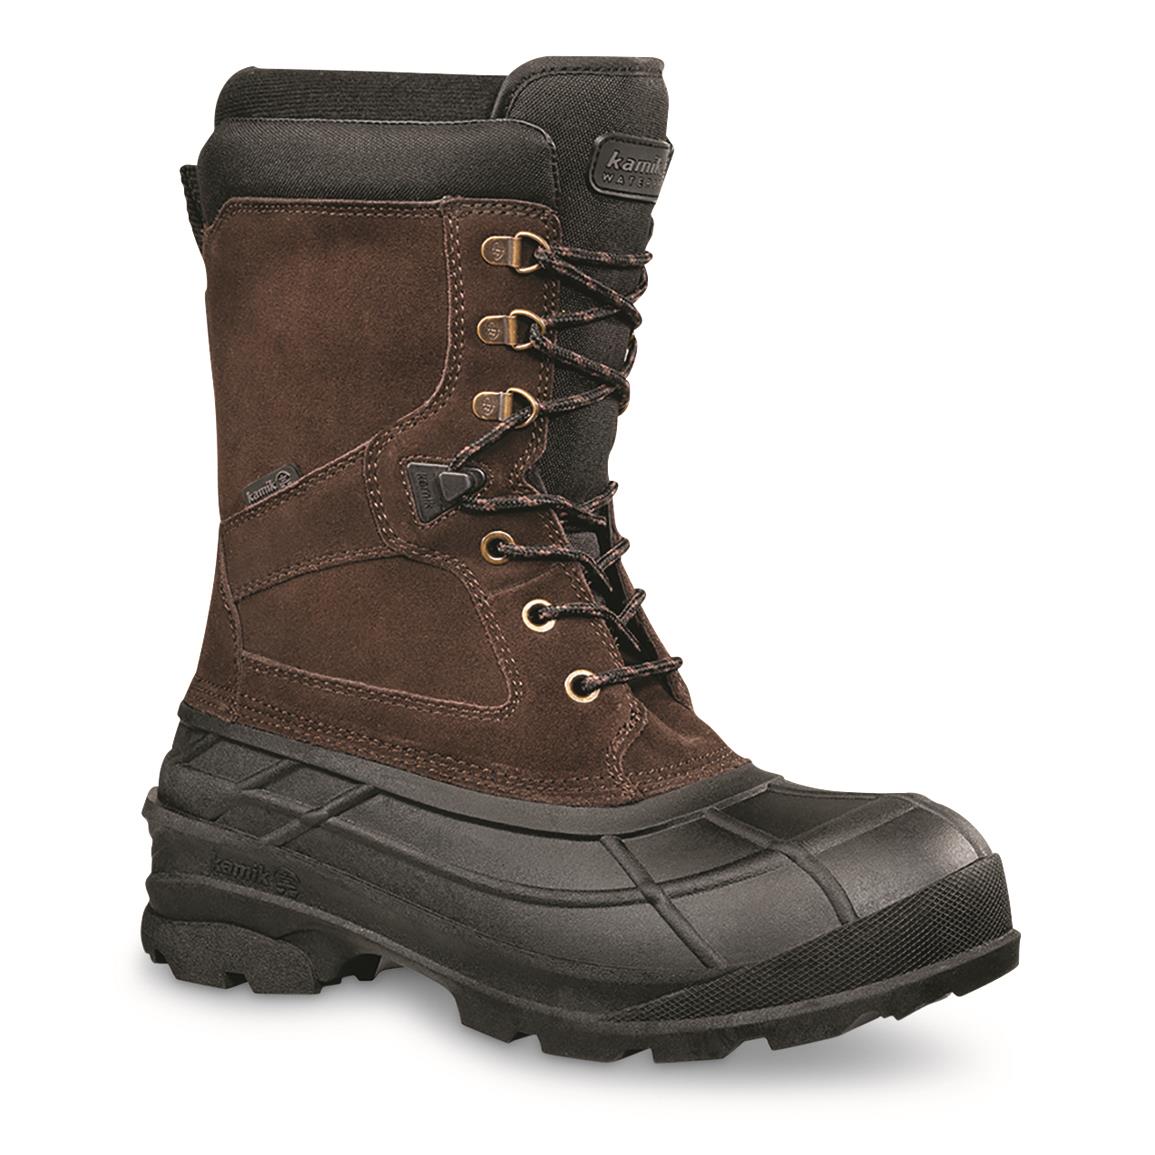 Kamik Men's NationPlus Waterproof Insulated Boots, Size 7, Dark Brown